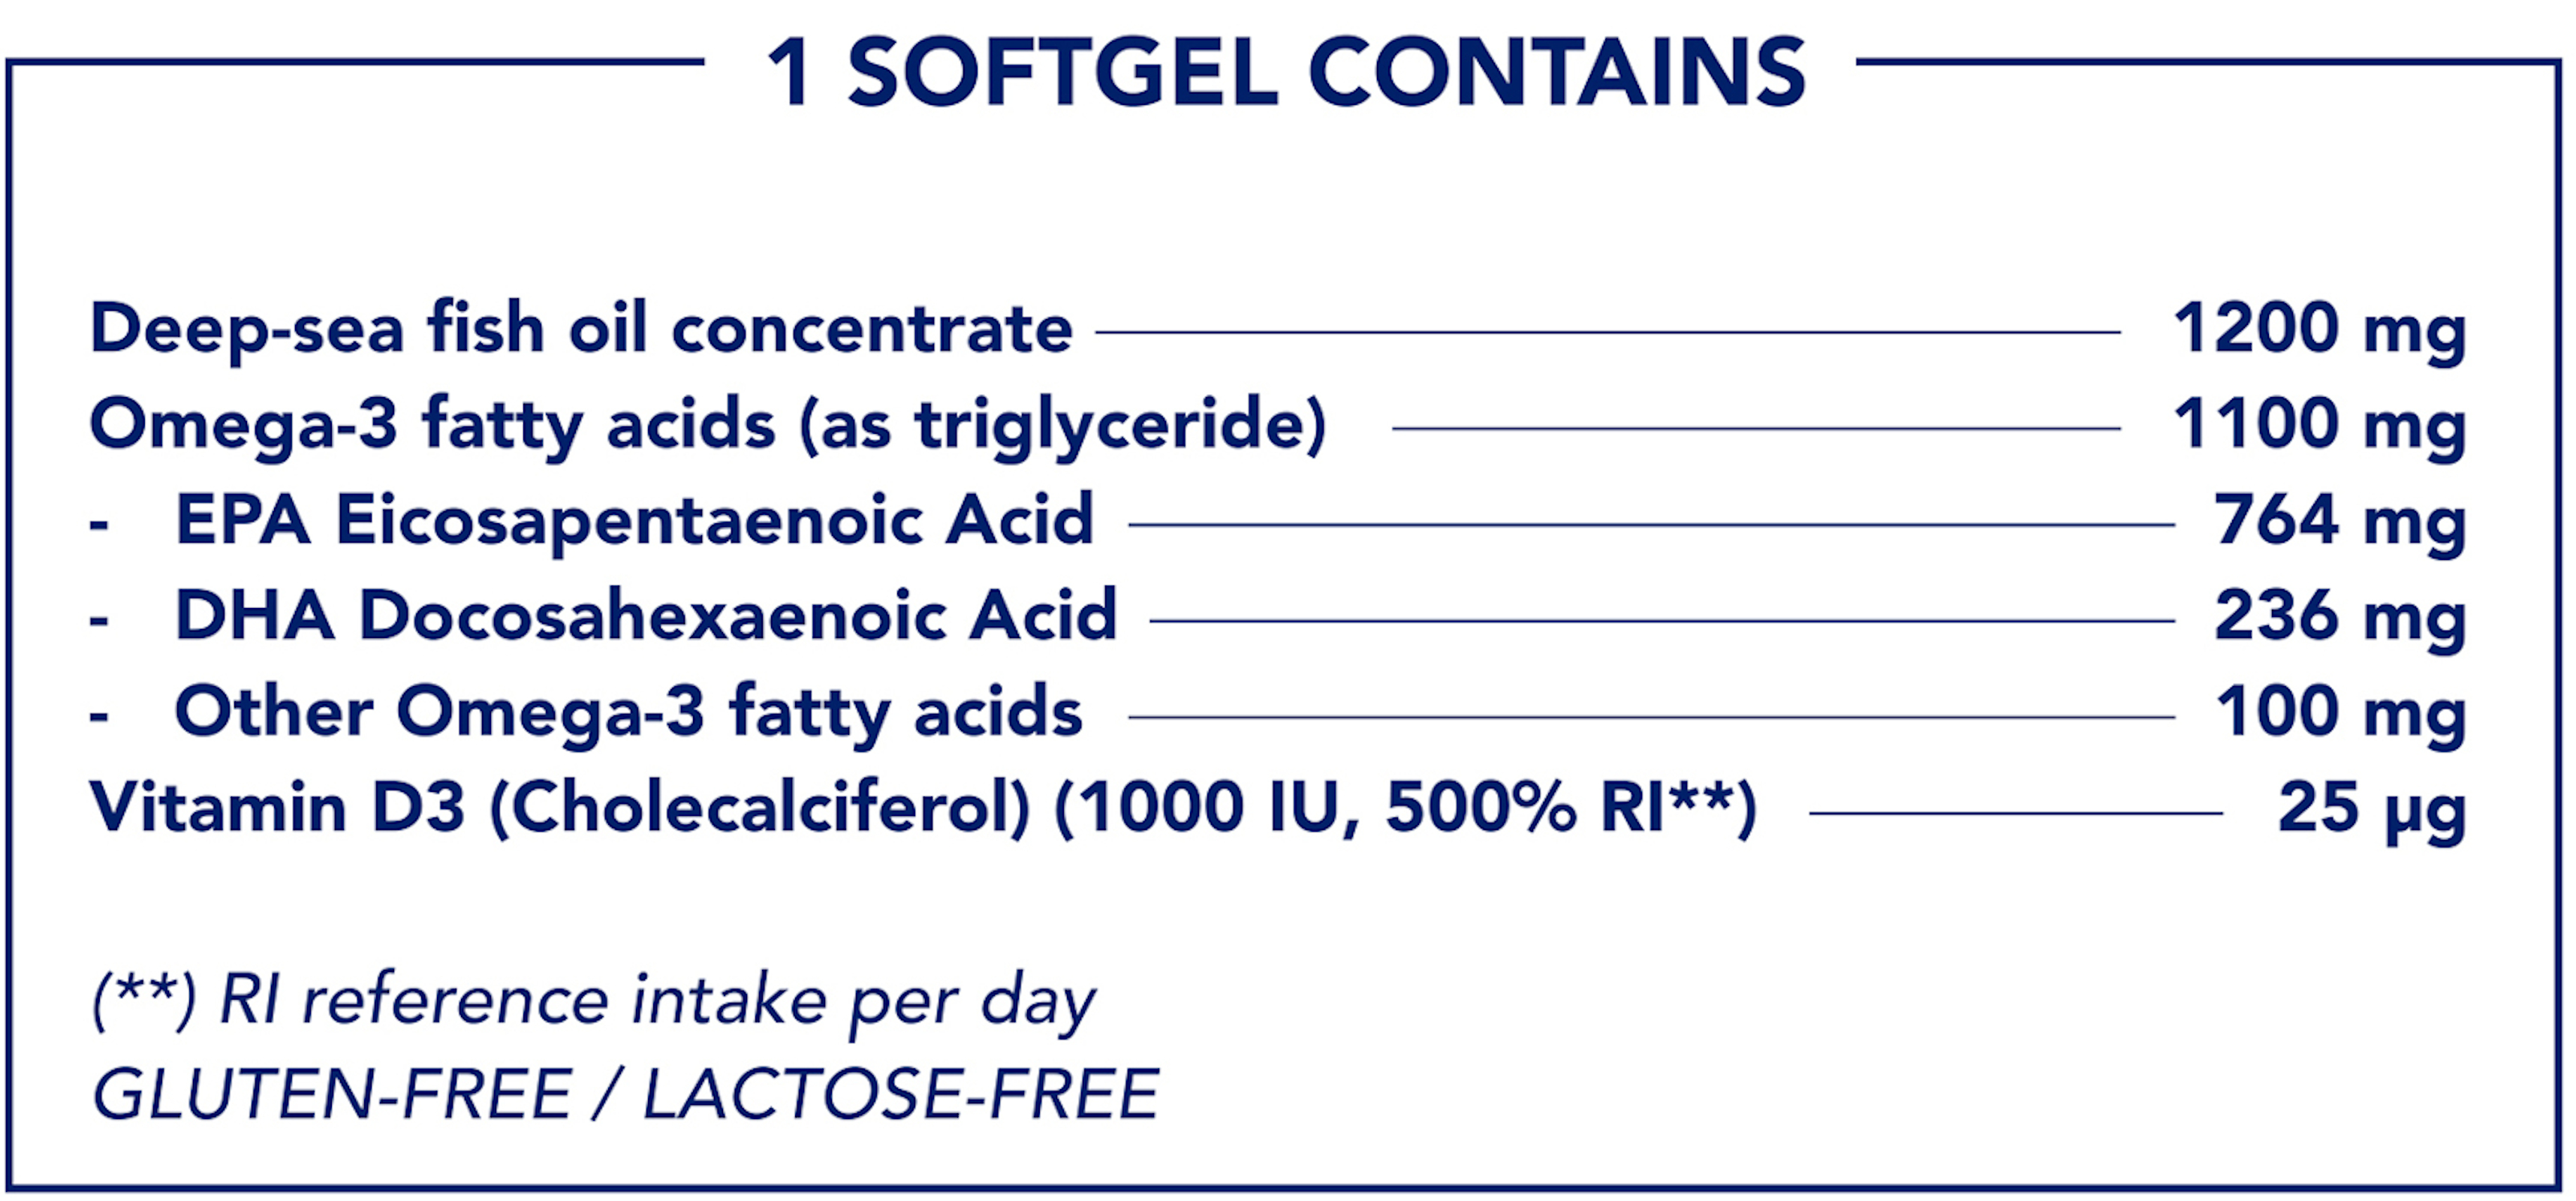 1 SOFTGEL CONTAINS:Deep-sea fish oil concentrate 1200 mgOmega-3 fatty acids (as triglyceride) 1100 mgEPA Eicosapentaenoic Acid 764 mgDHA Docosahexaenoic Acid 236 mgOther Omega-3 fatty acids 100 mgVitamin D3 (Cholecalciferol) (1000 IU, 500% RI**) 25 µg(**) Rl reference intake per dayGLUTEN-FREE / LACTOSE-FREE